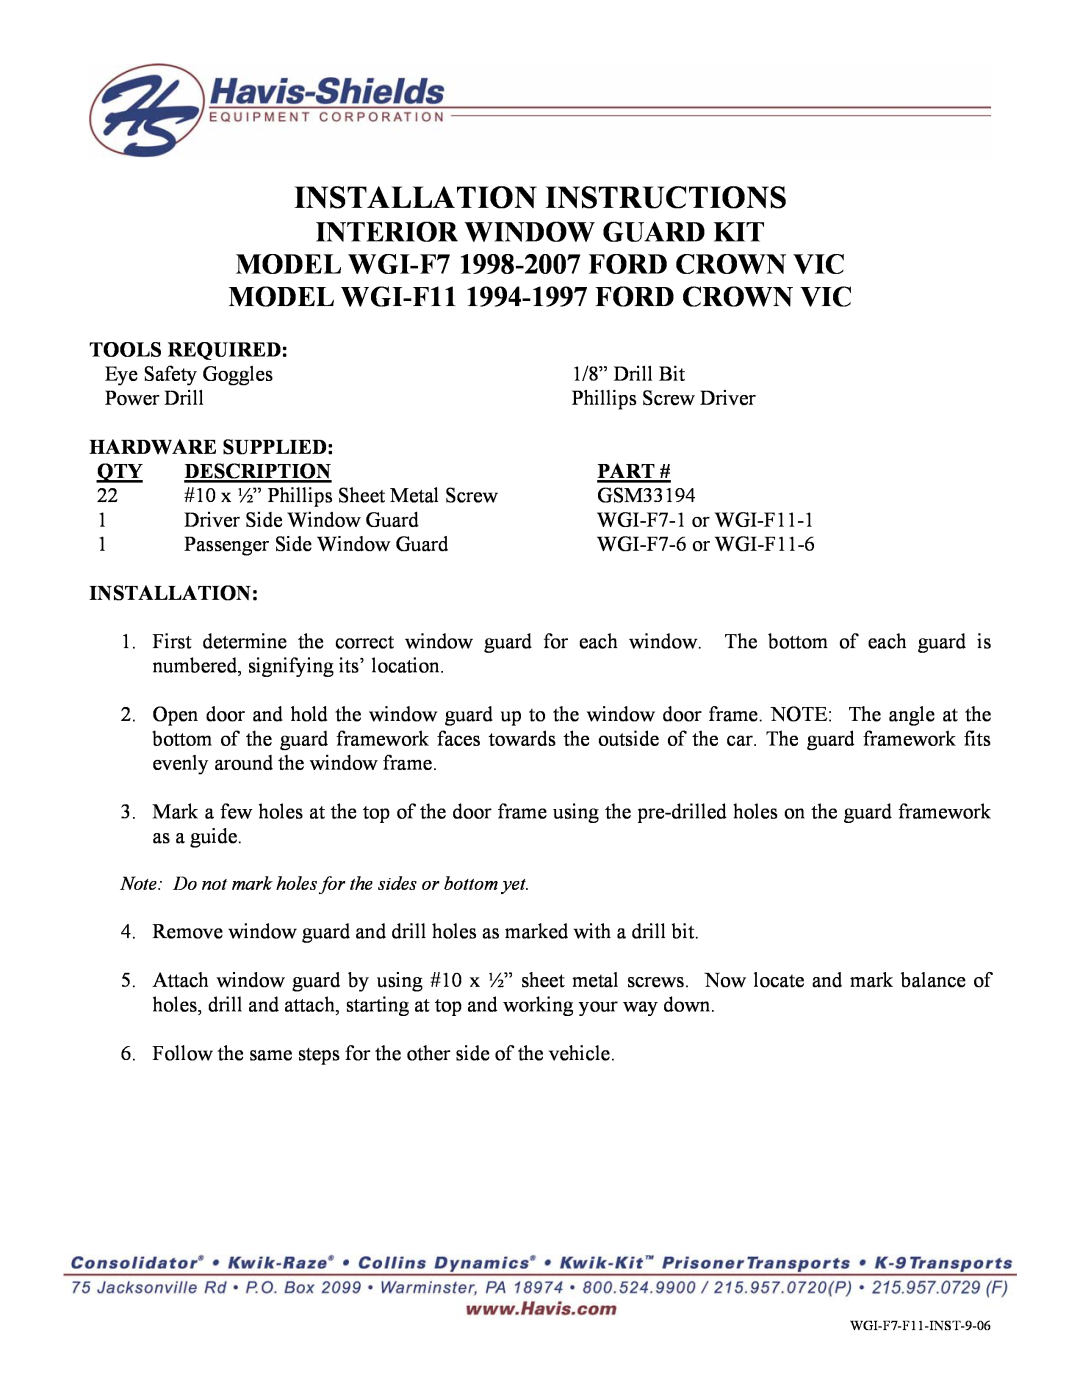 Havis-Shields installation instructions Installation Instructions, MODEL WGI-F11 1994-1997 FORD CROWN VIC, Description 